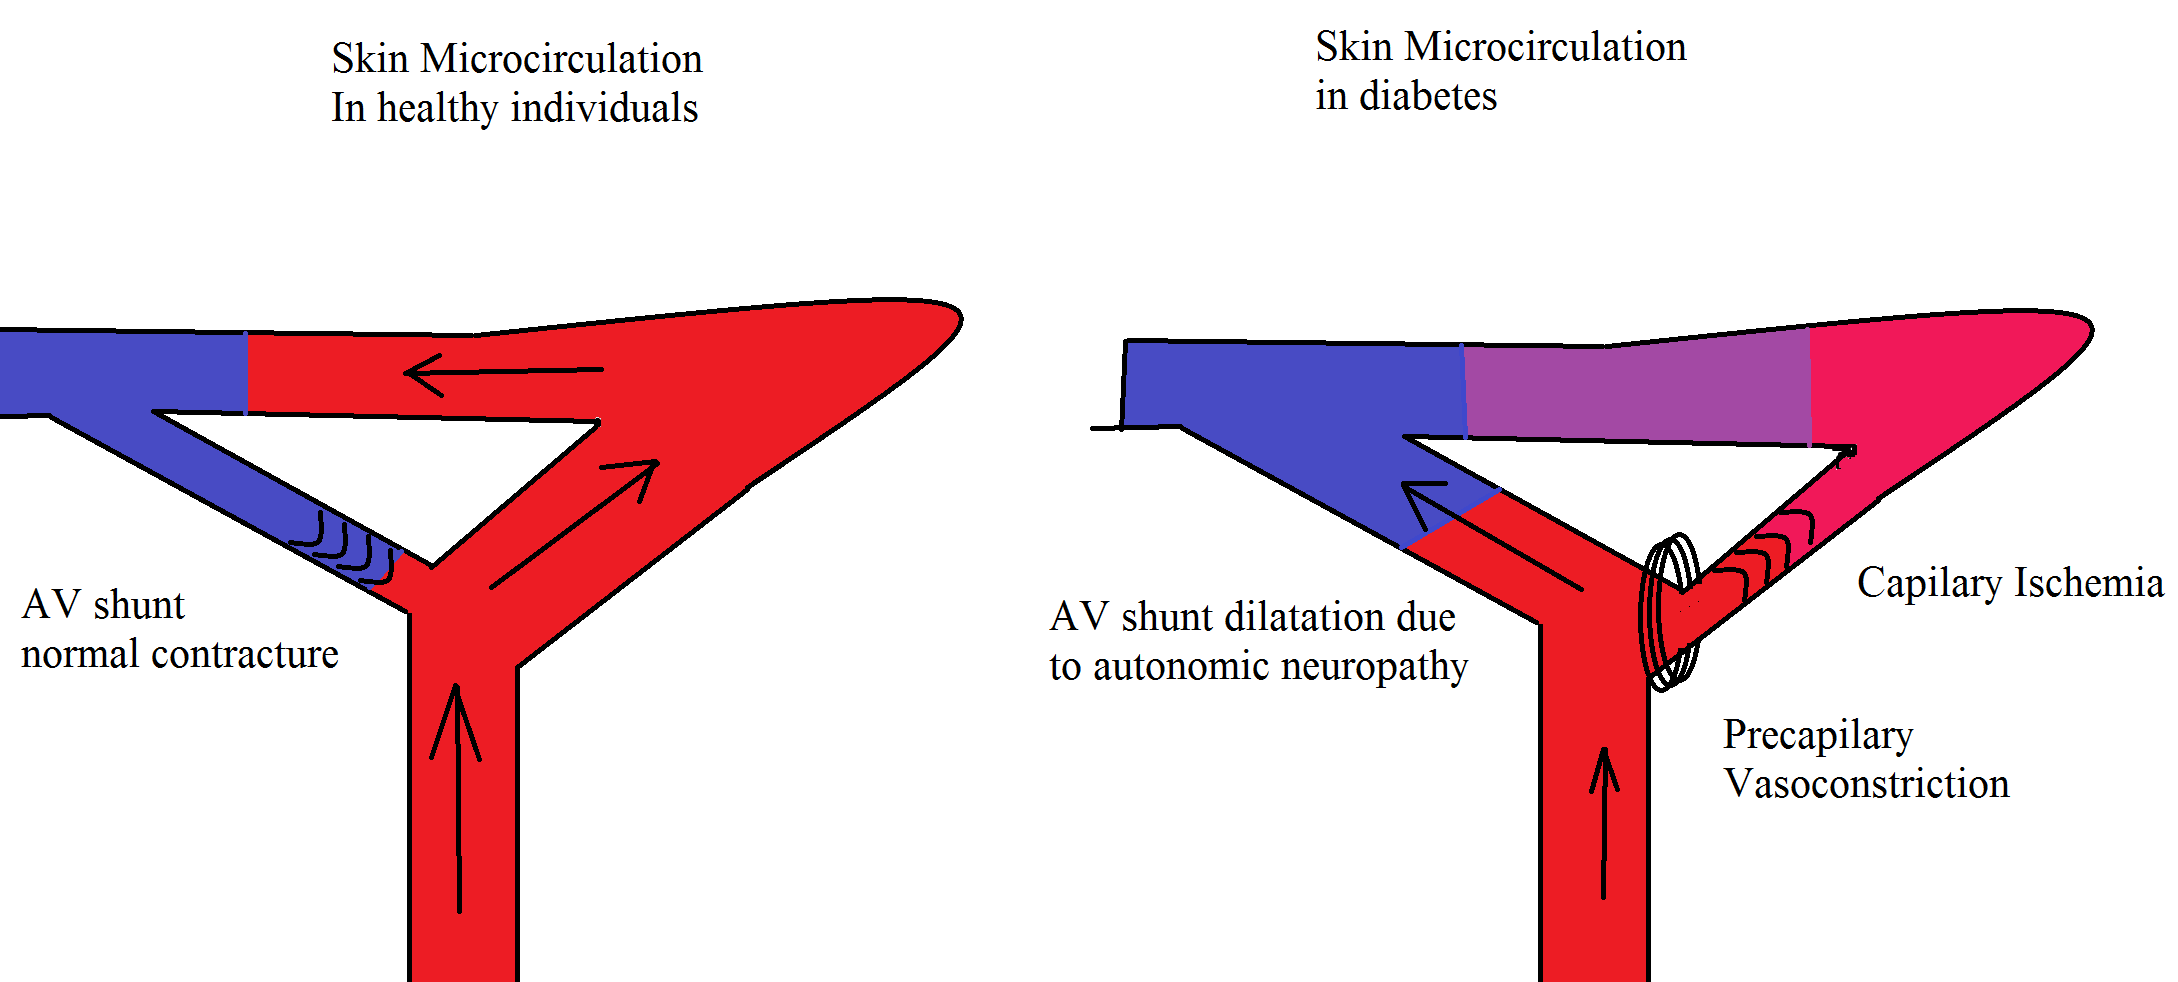 File:Microcirculation image.png